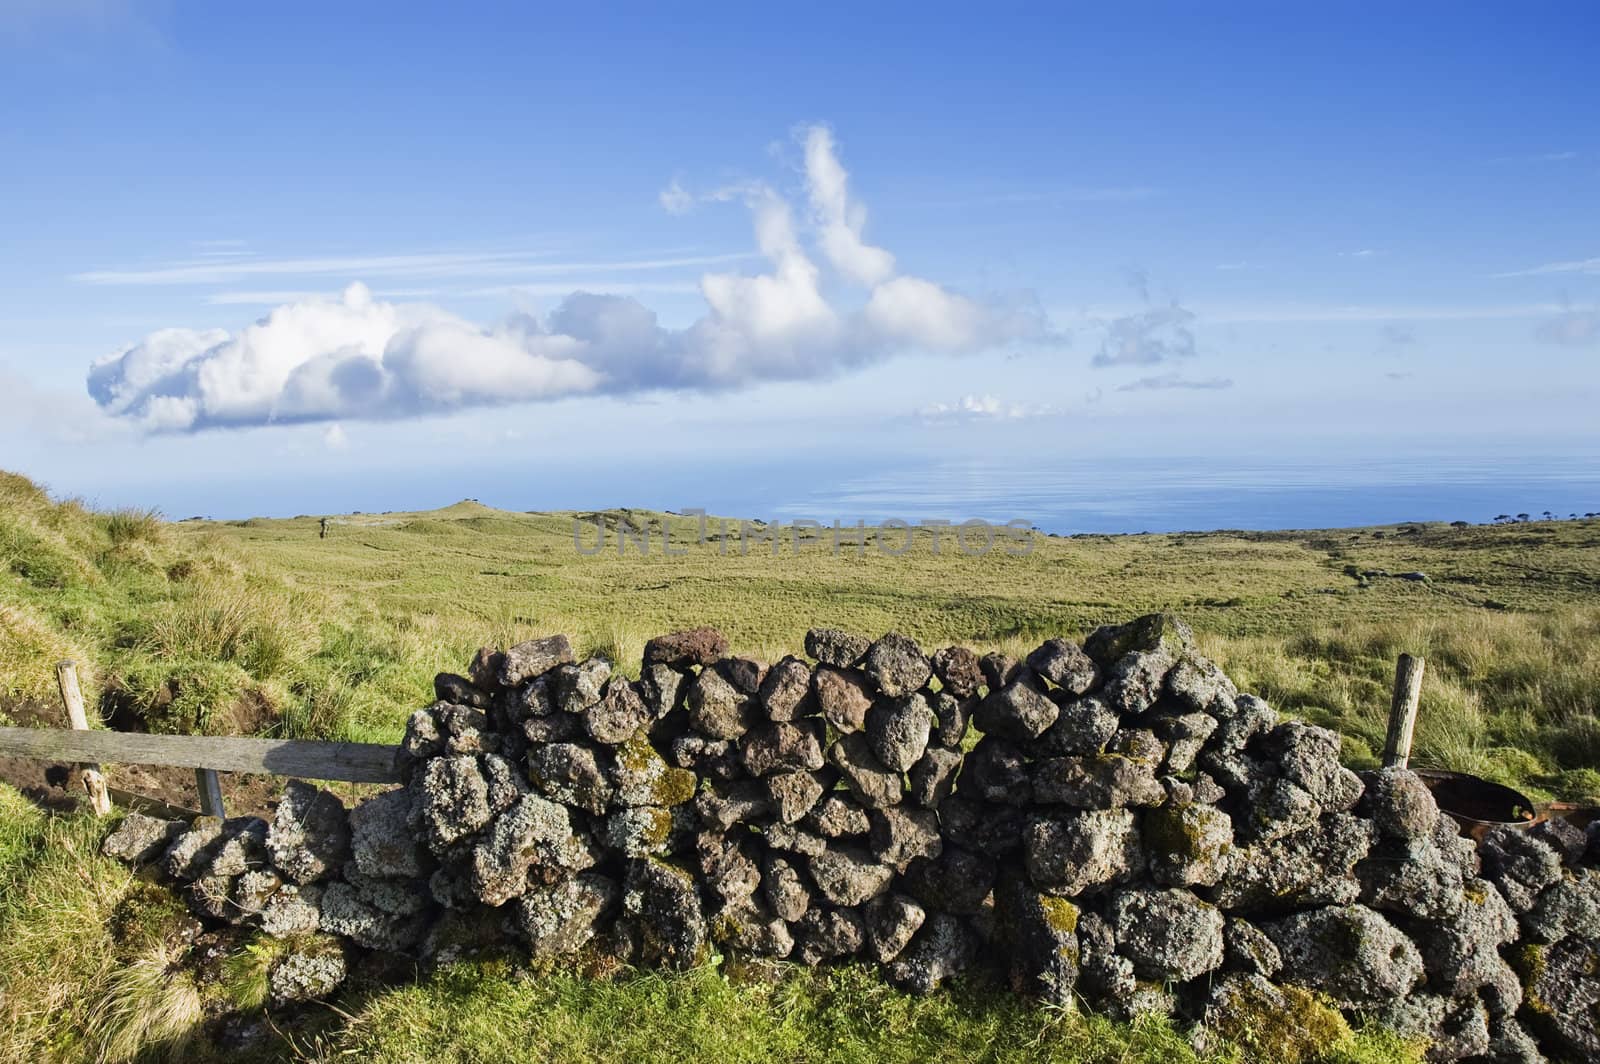 Idyllic green pasture landscape of Pico island, Azores, Portugal
